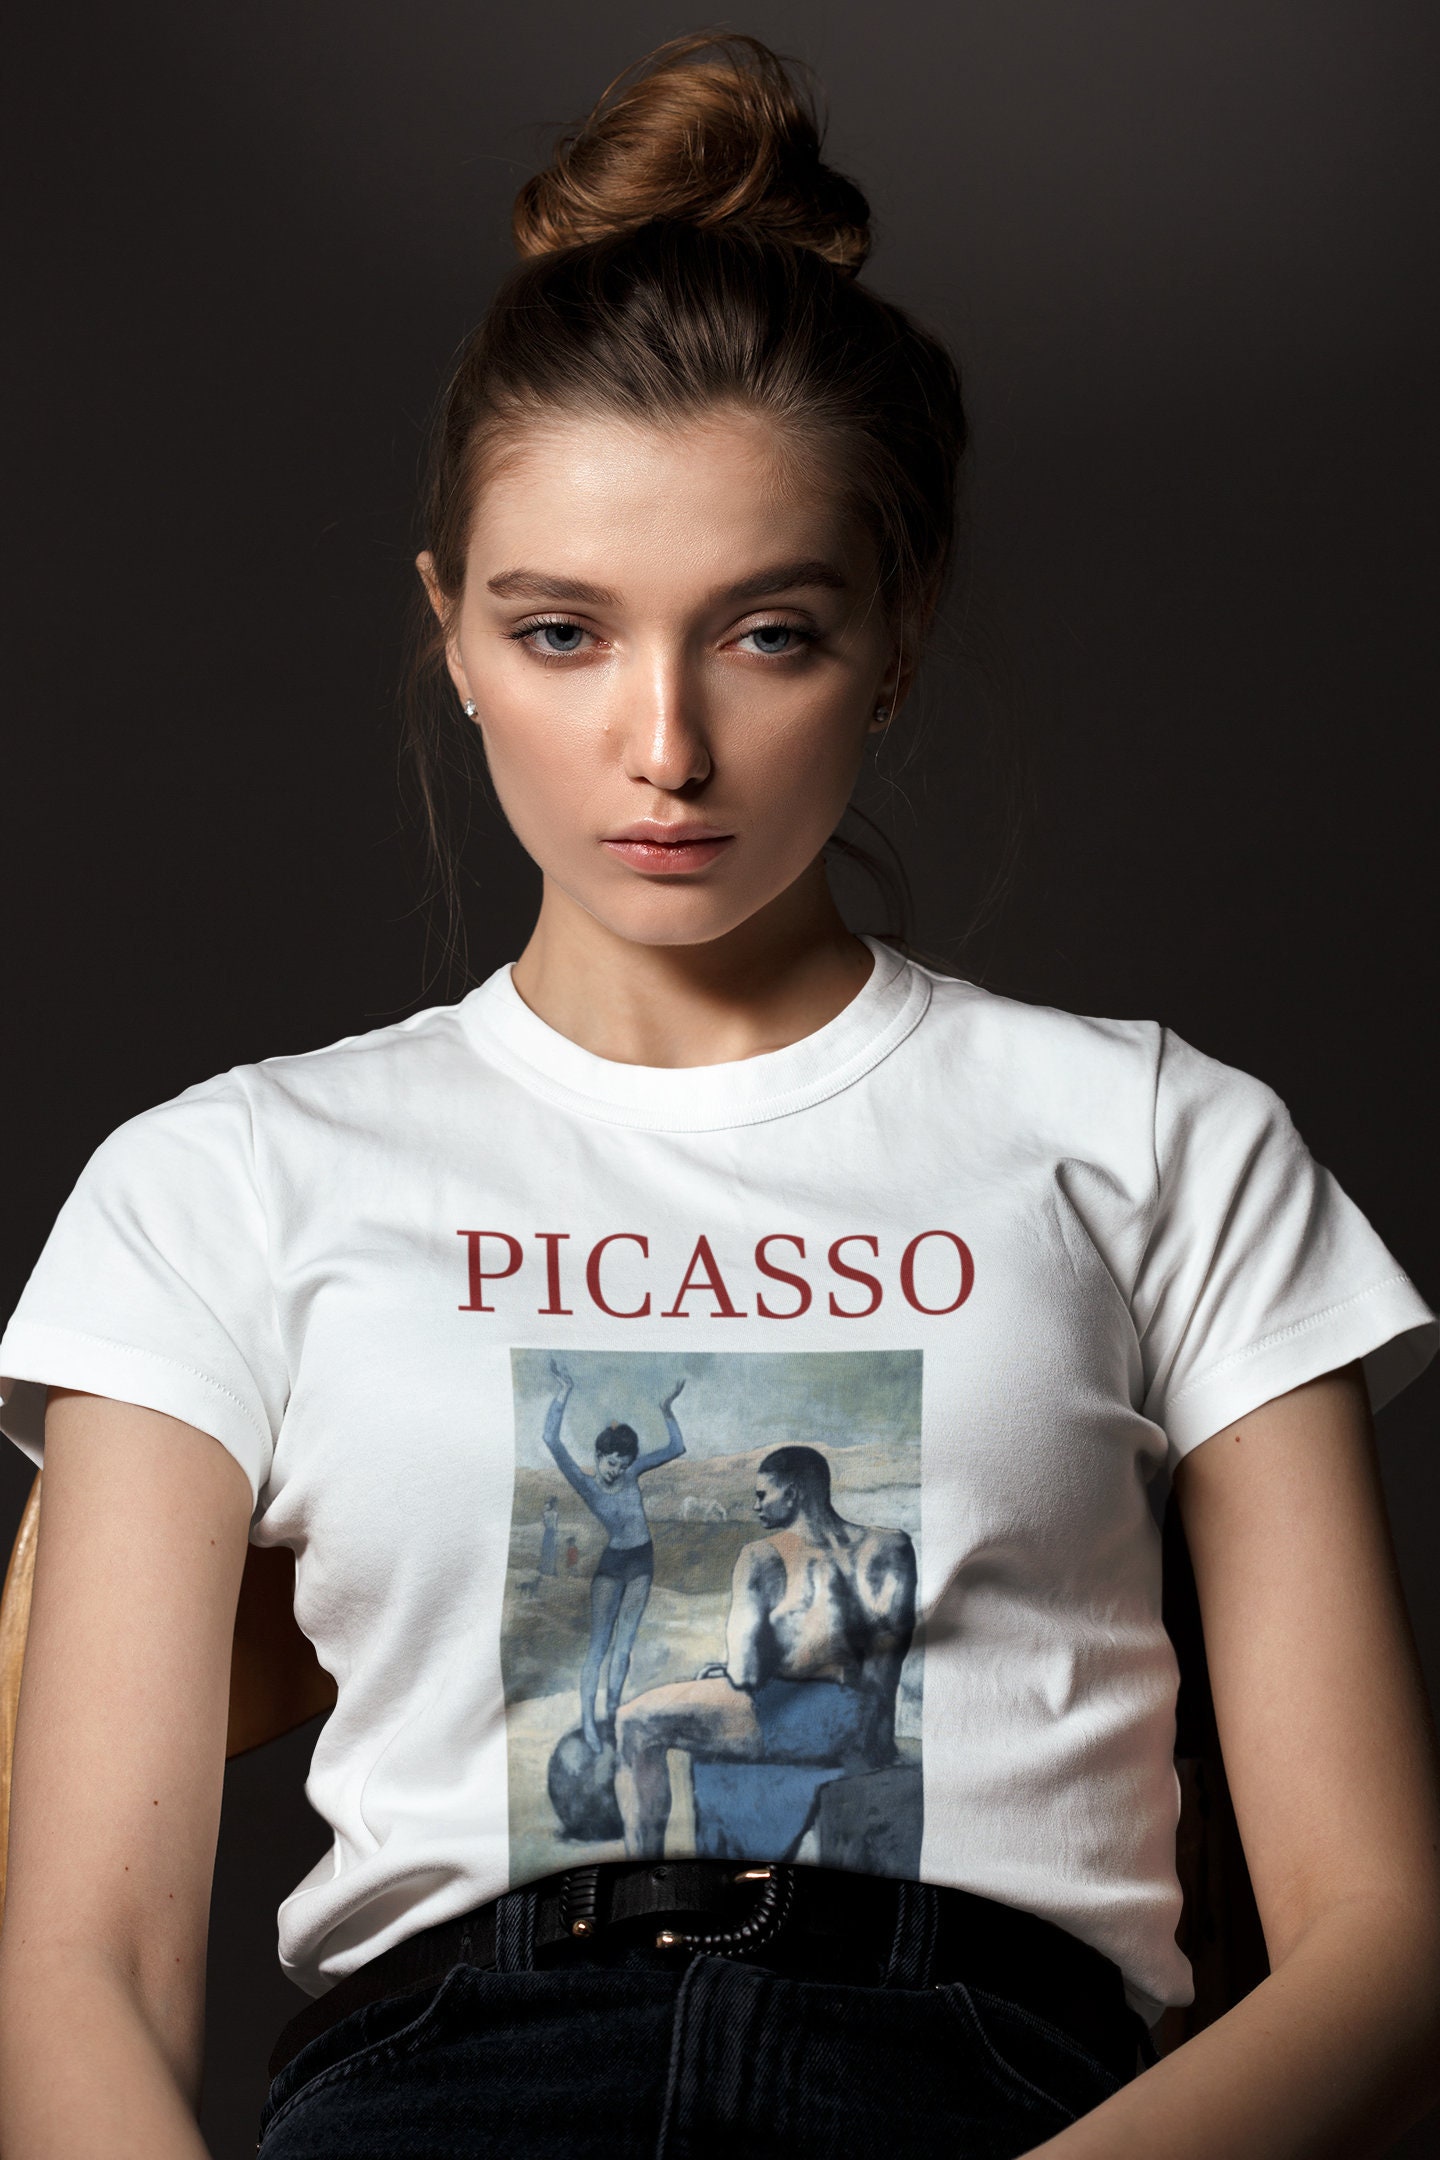 Girl On The Ball T Shirt Picasso - Premium Qualität 1903 von PurpleBananaCo